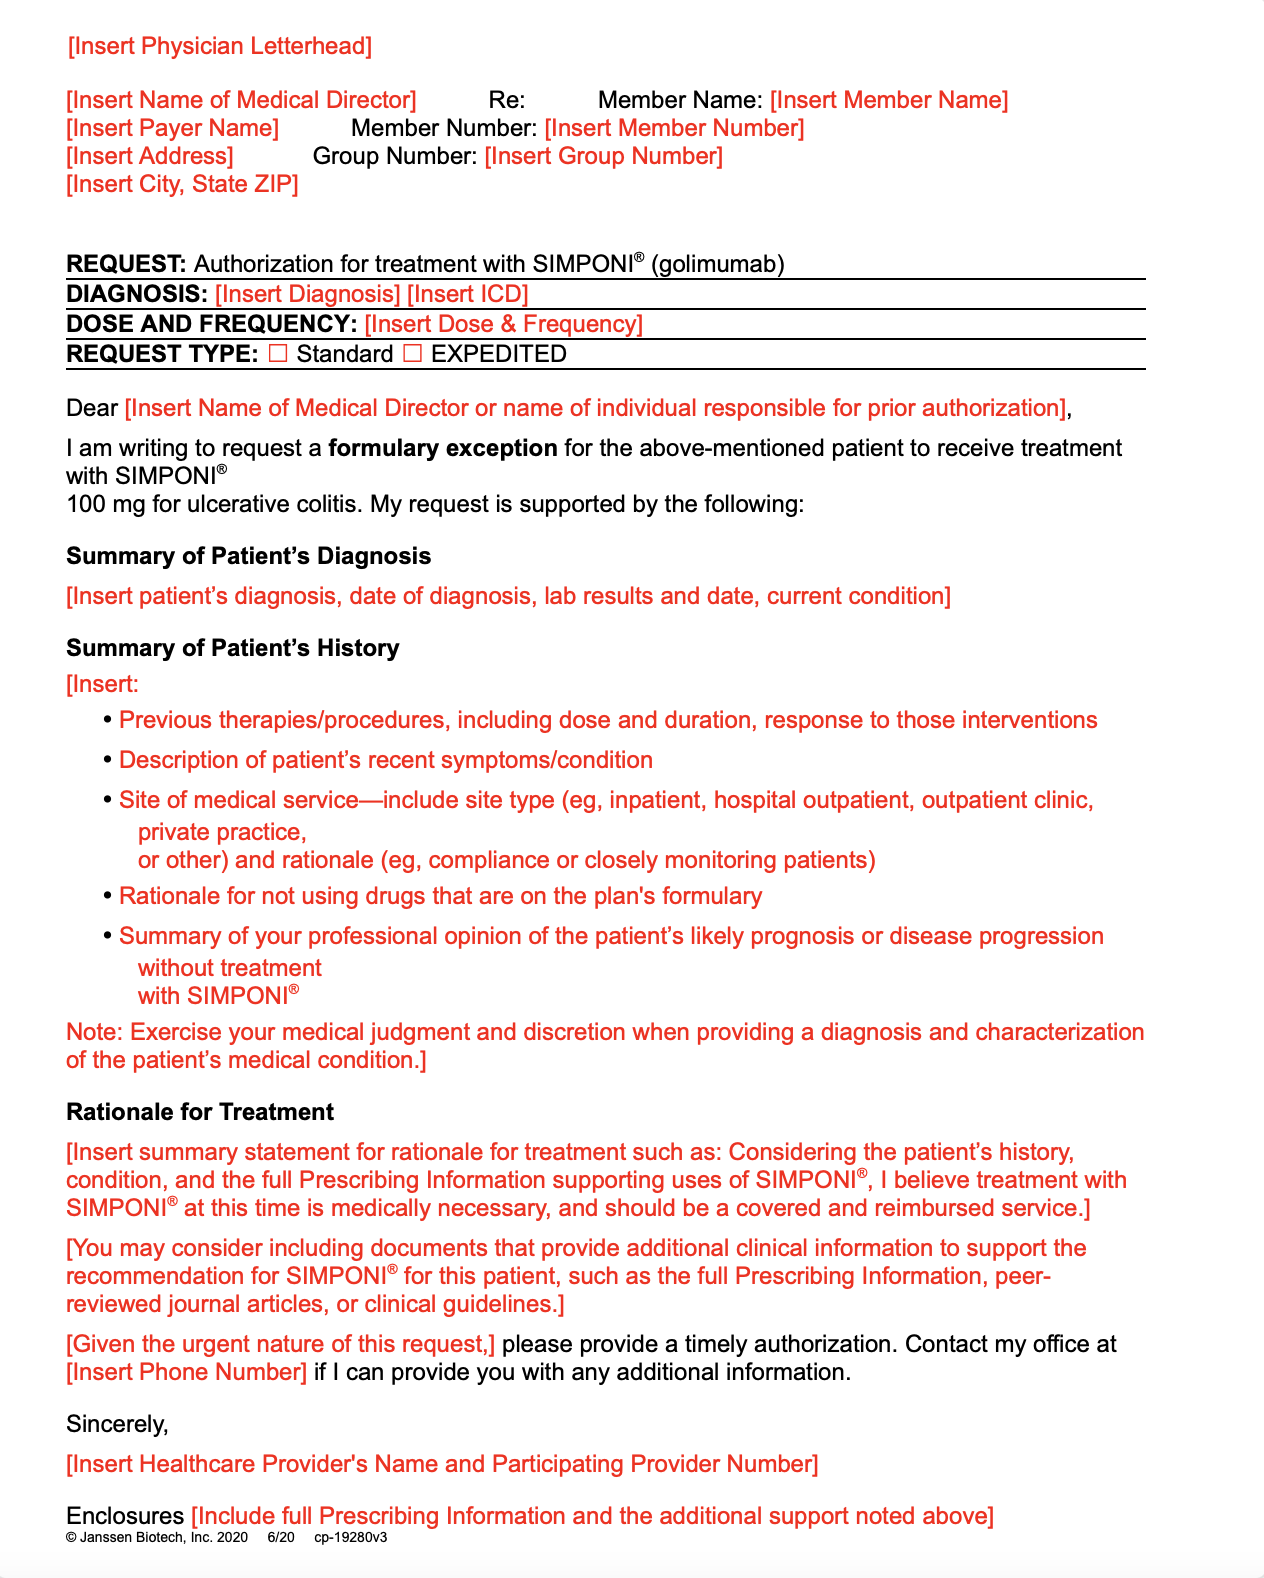 SIMPONI® Letter of Exception (Ulcerative Colitis)